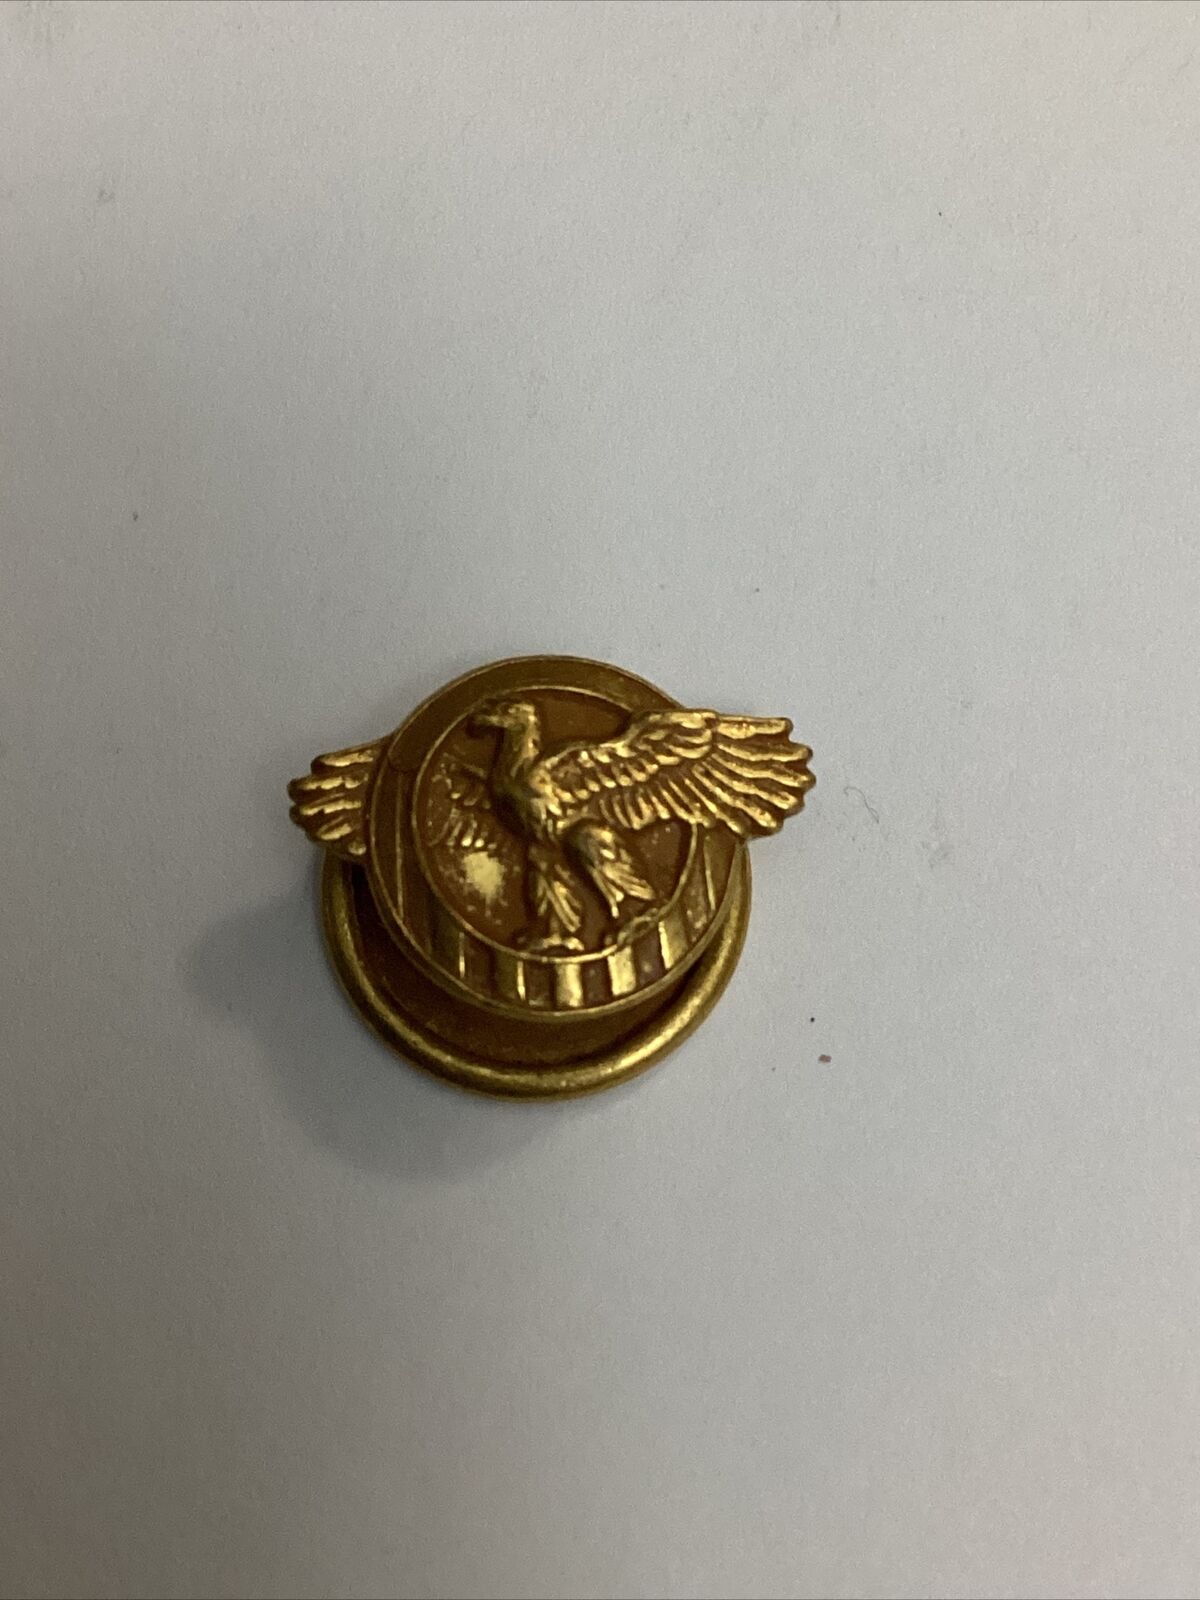 Vintage WWII “Ruptured duck” Honorable Discharge U.S. Navy Lapel Pin